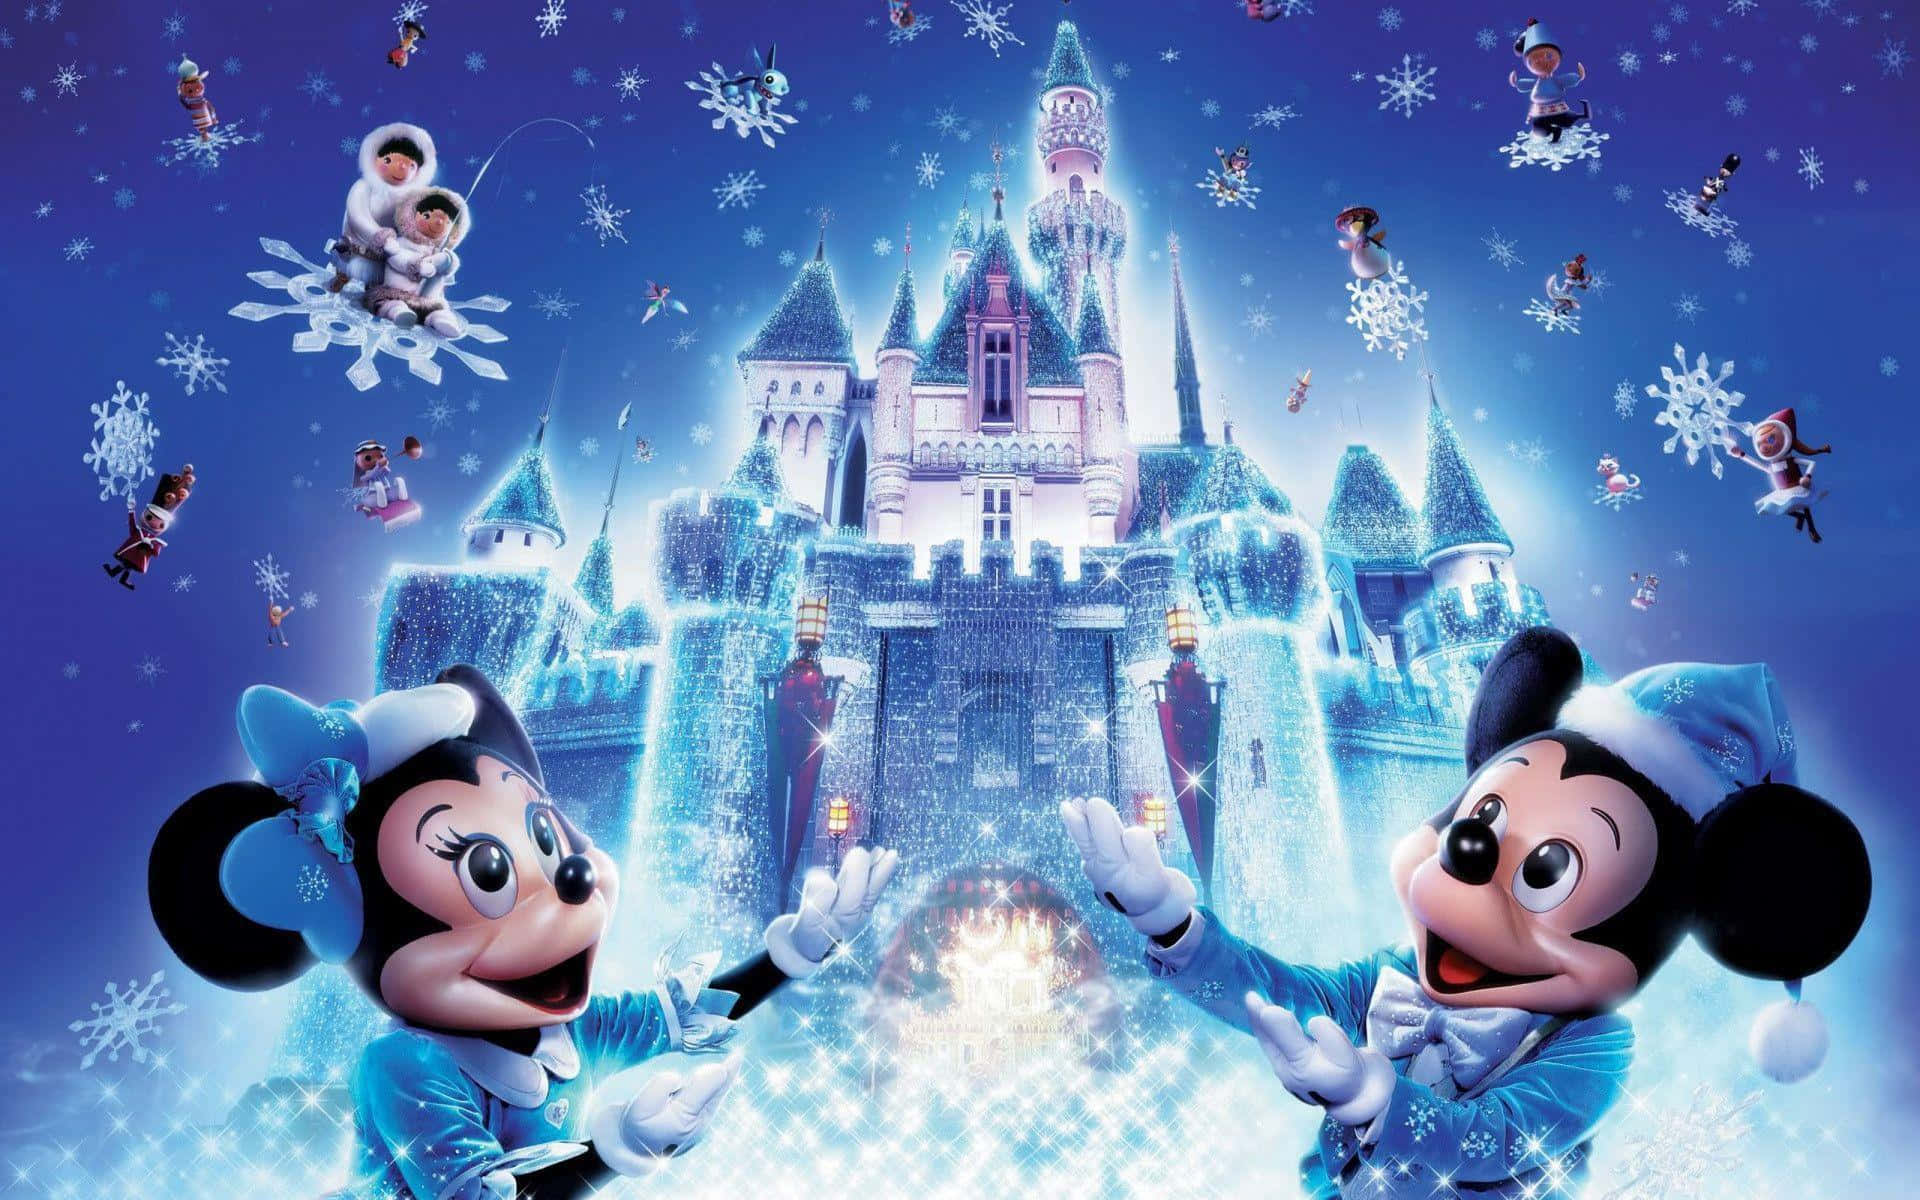 _ Joyful memories with Snow White, during a Disney Christmas_